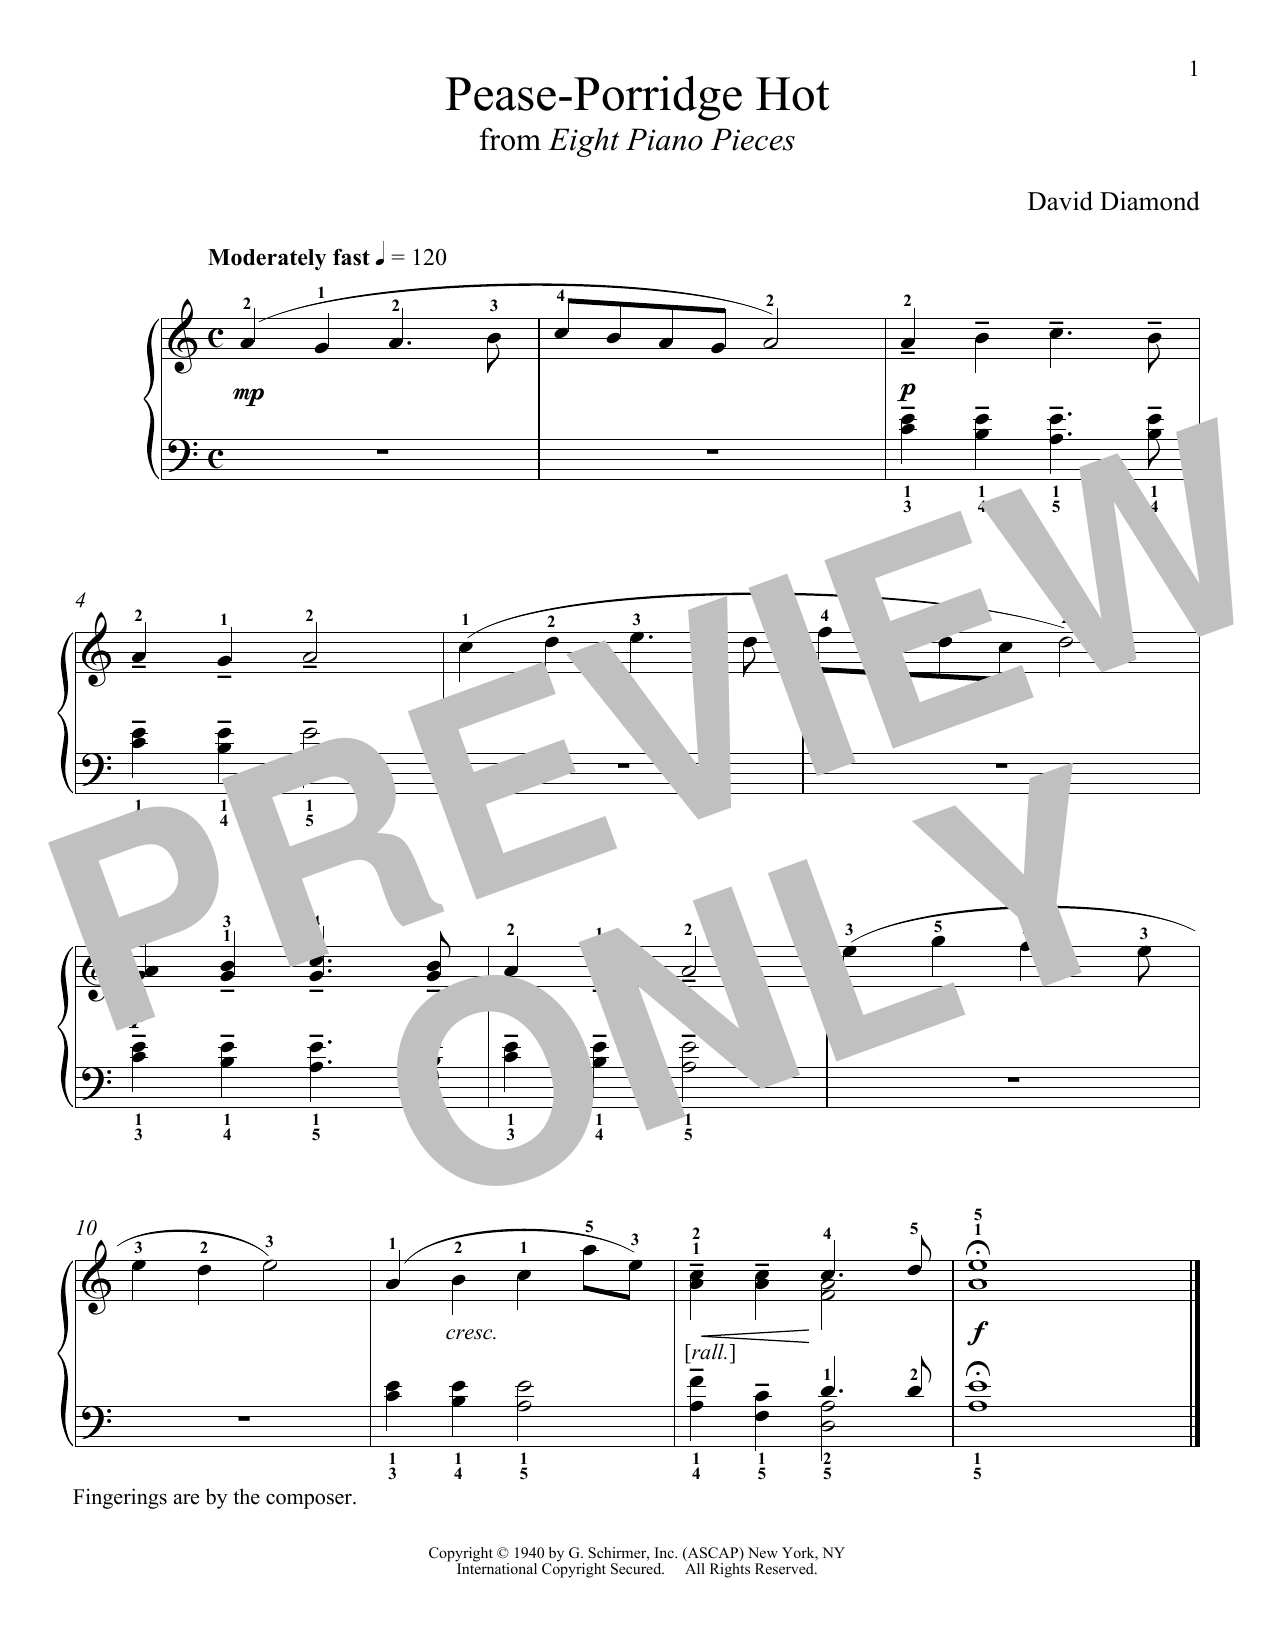 David Diamond Pease-Porridge Hot Sheet Music Notes & Chords for Piano - Download or Print PDF